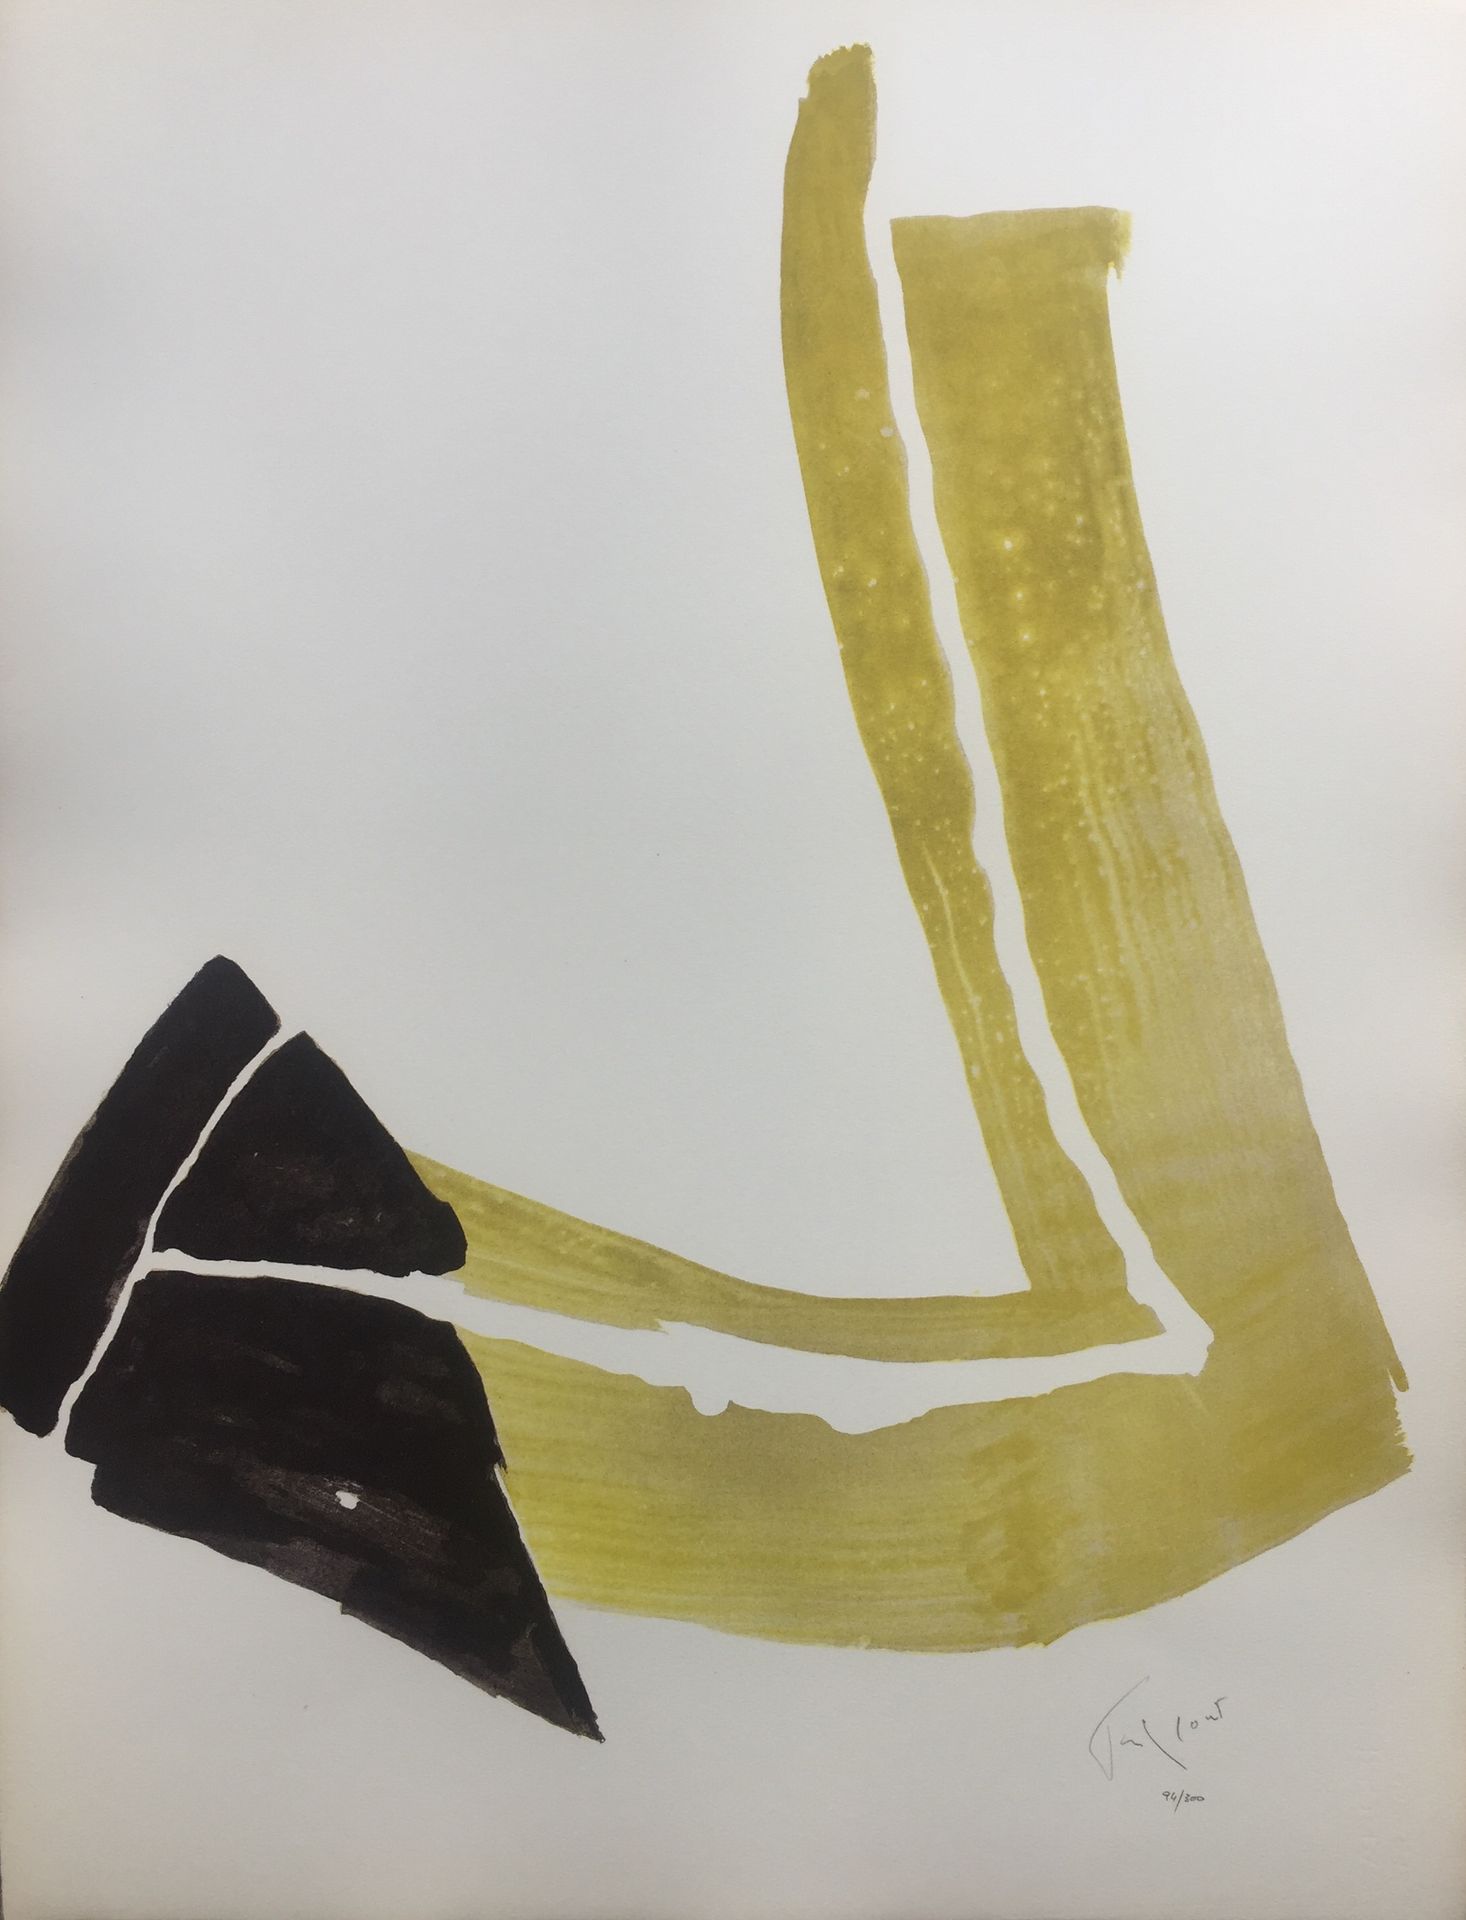 Pierre TAL COAT 皮埃尔-塔尔大衣

倾斜II, 1970年

原始石版画

由艺术家用铅笔签名并编号

在Arches纸上

状况极佳



拍&hellip;